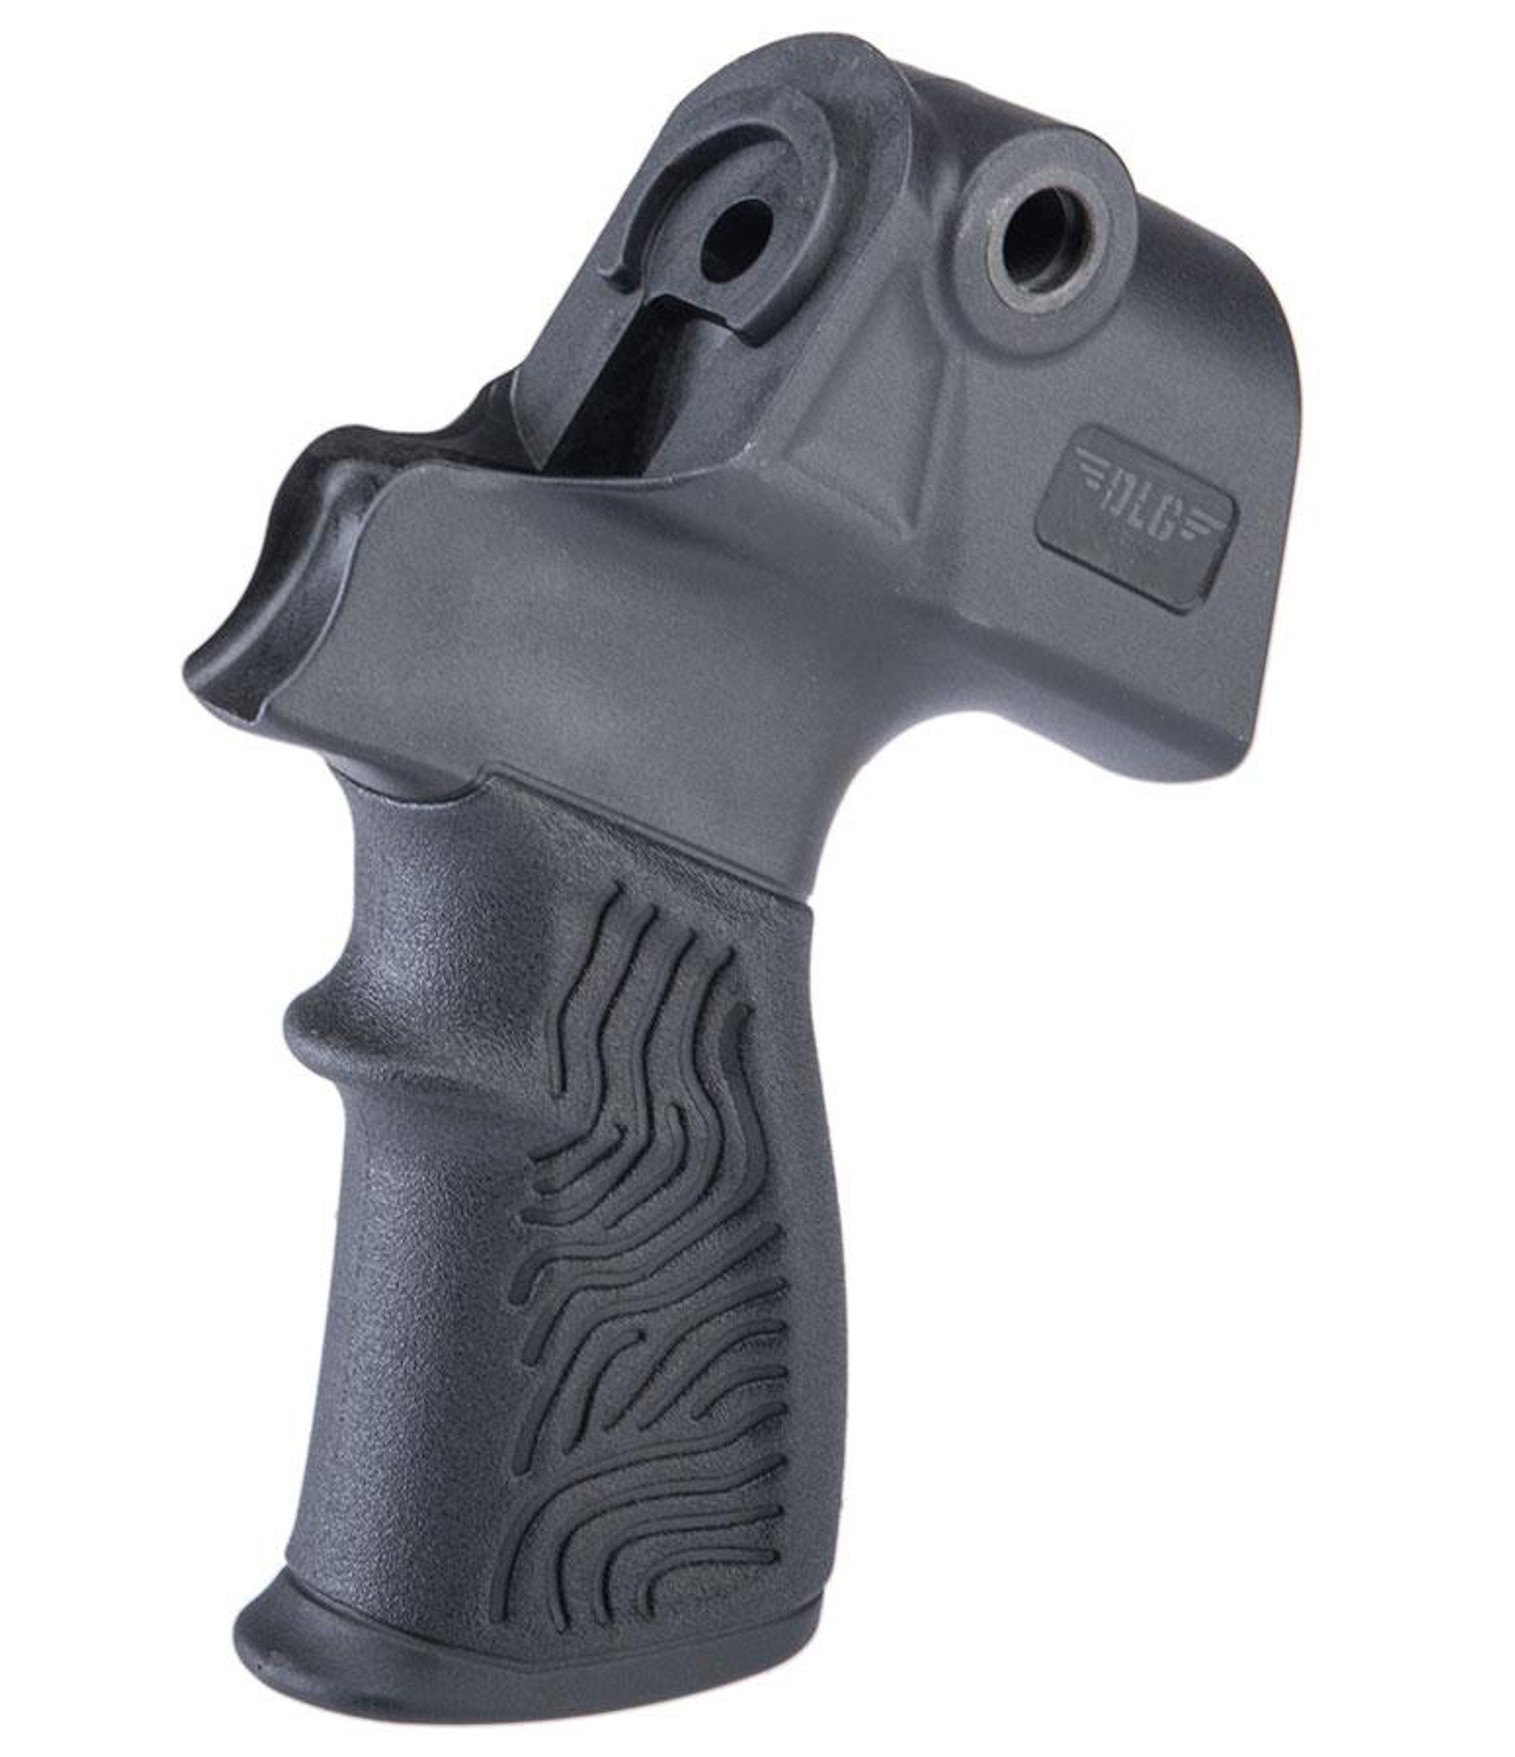 VISM DLG Pistol Grip Stock Adapter for Mossberg 500 / 590 Shotguns